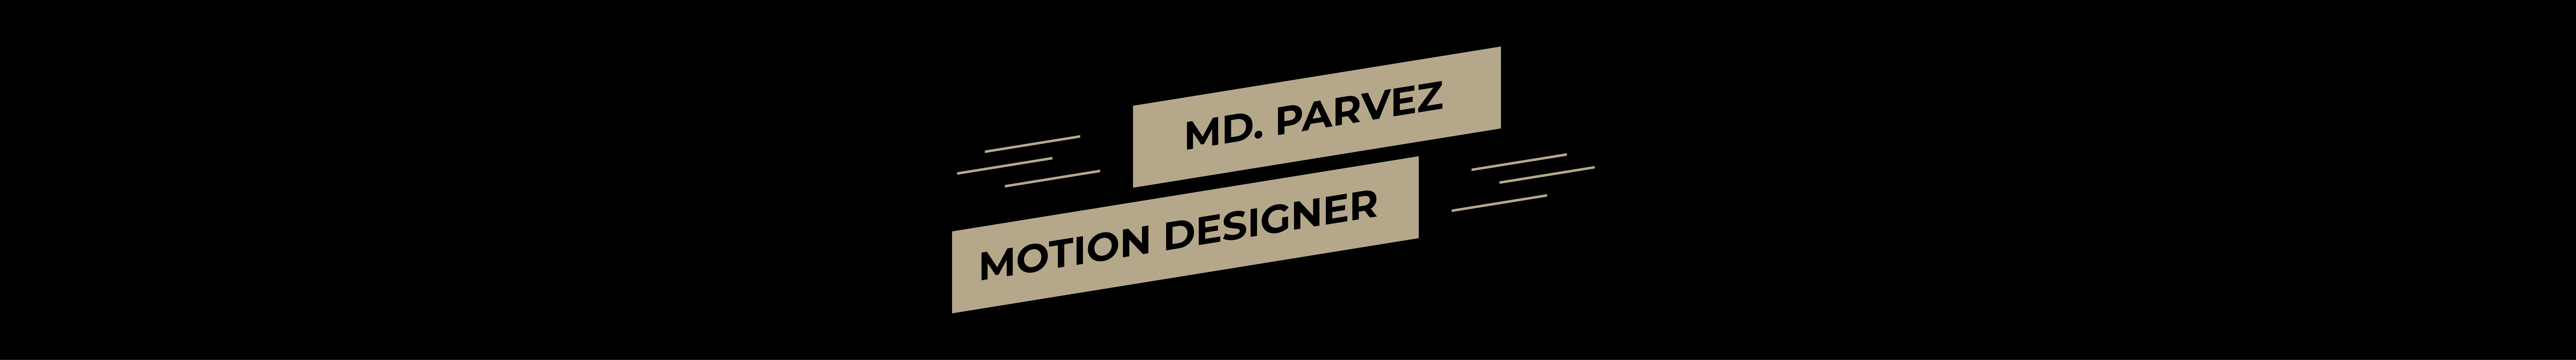 Md Parvez's profile banner